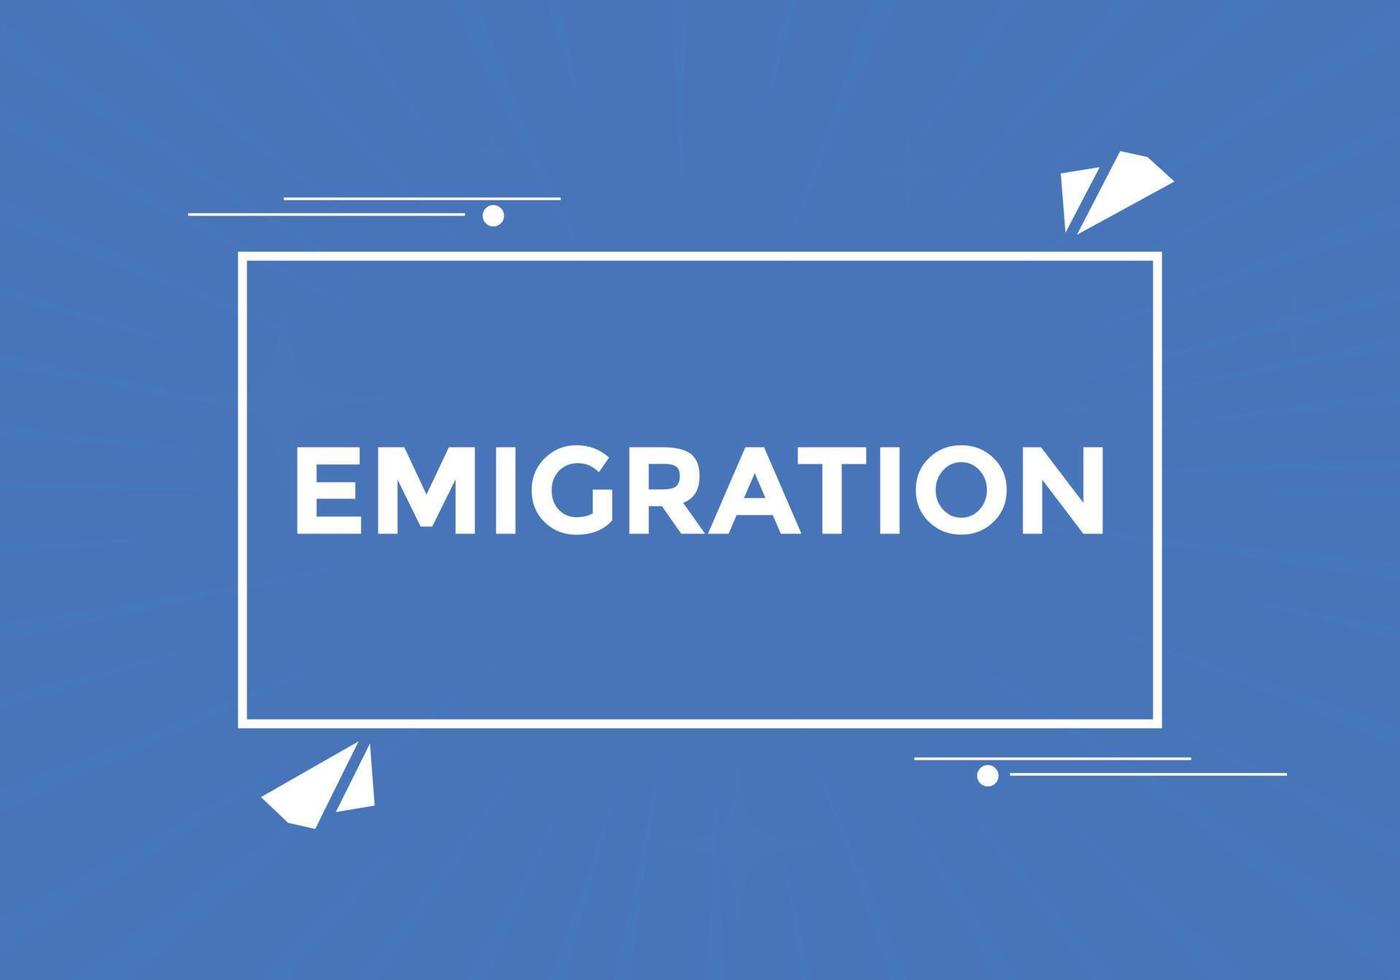 botón de emigración. burbuja de diálogo. banner web colorido de emigración. ilustración vectorial vector